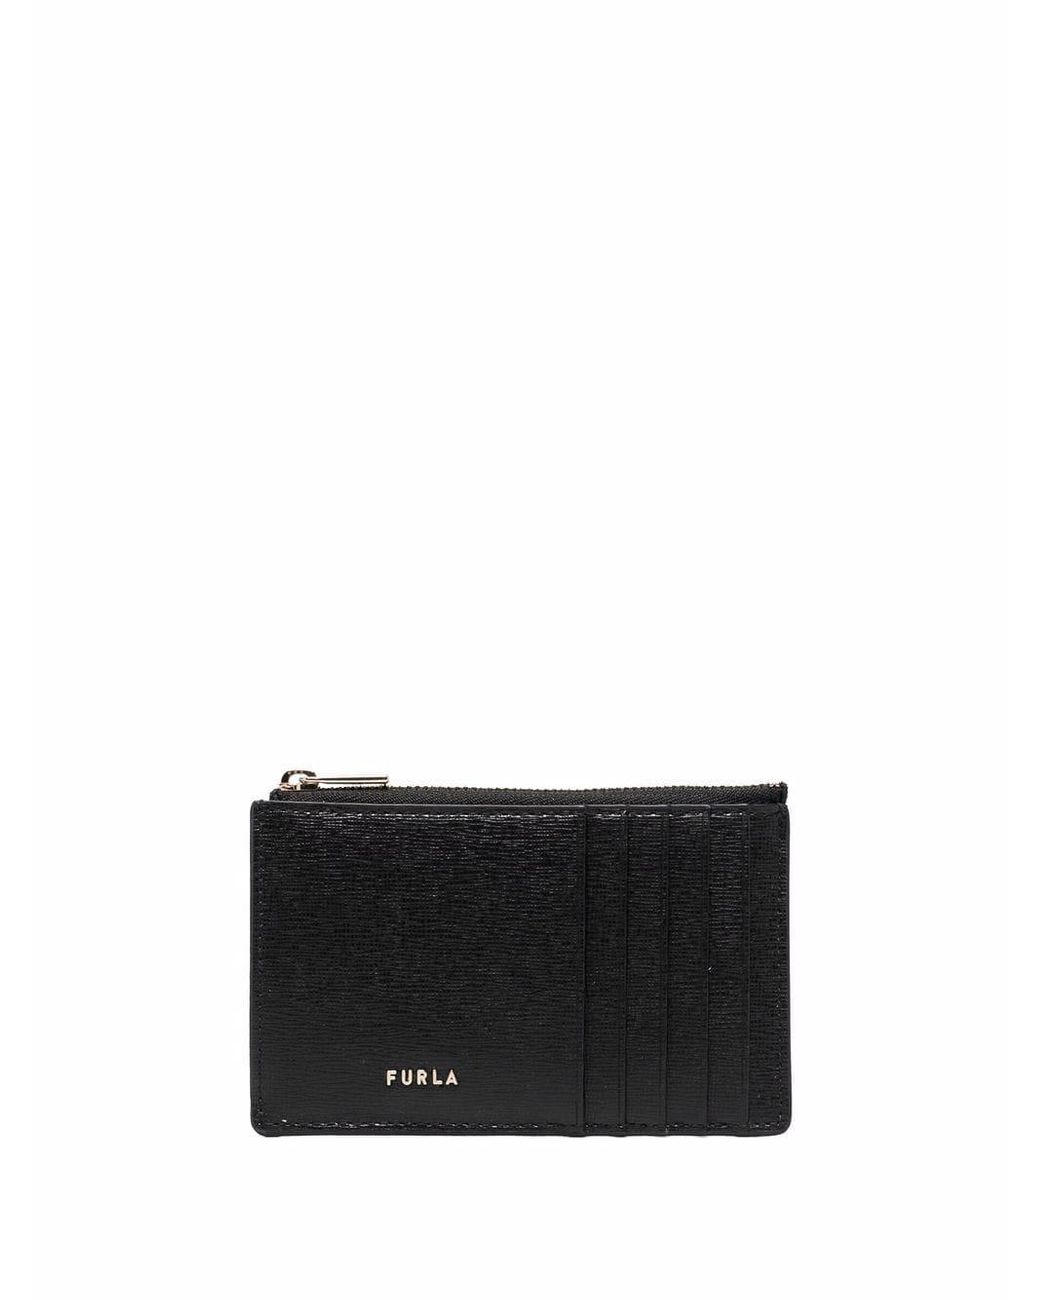 Furla Leather Logo Cardholder Wallet in Black - Lyst